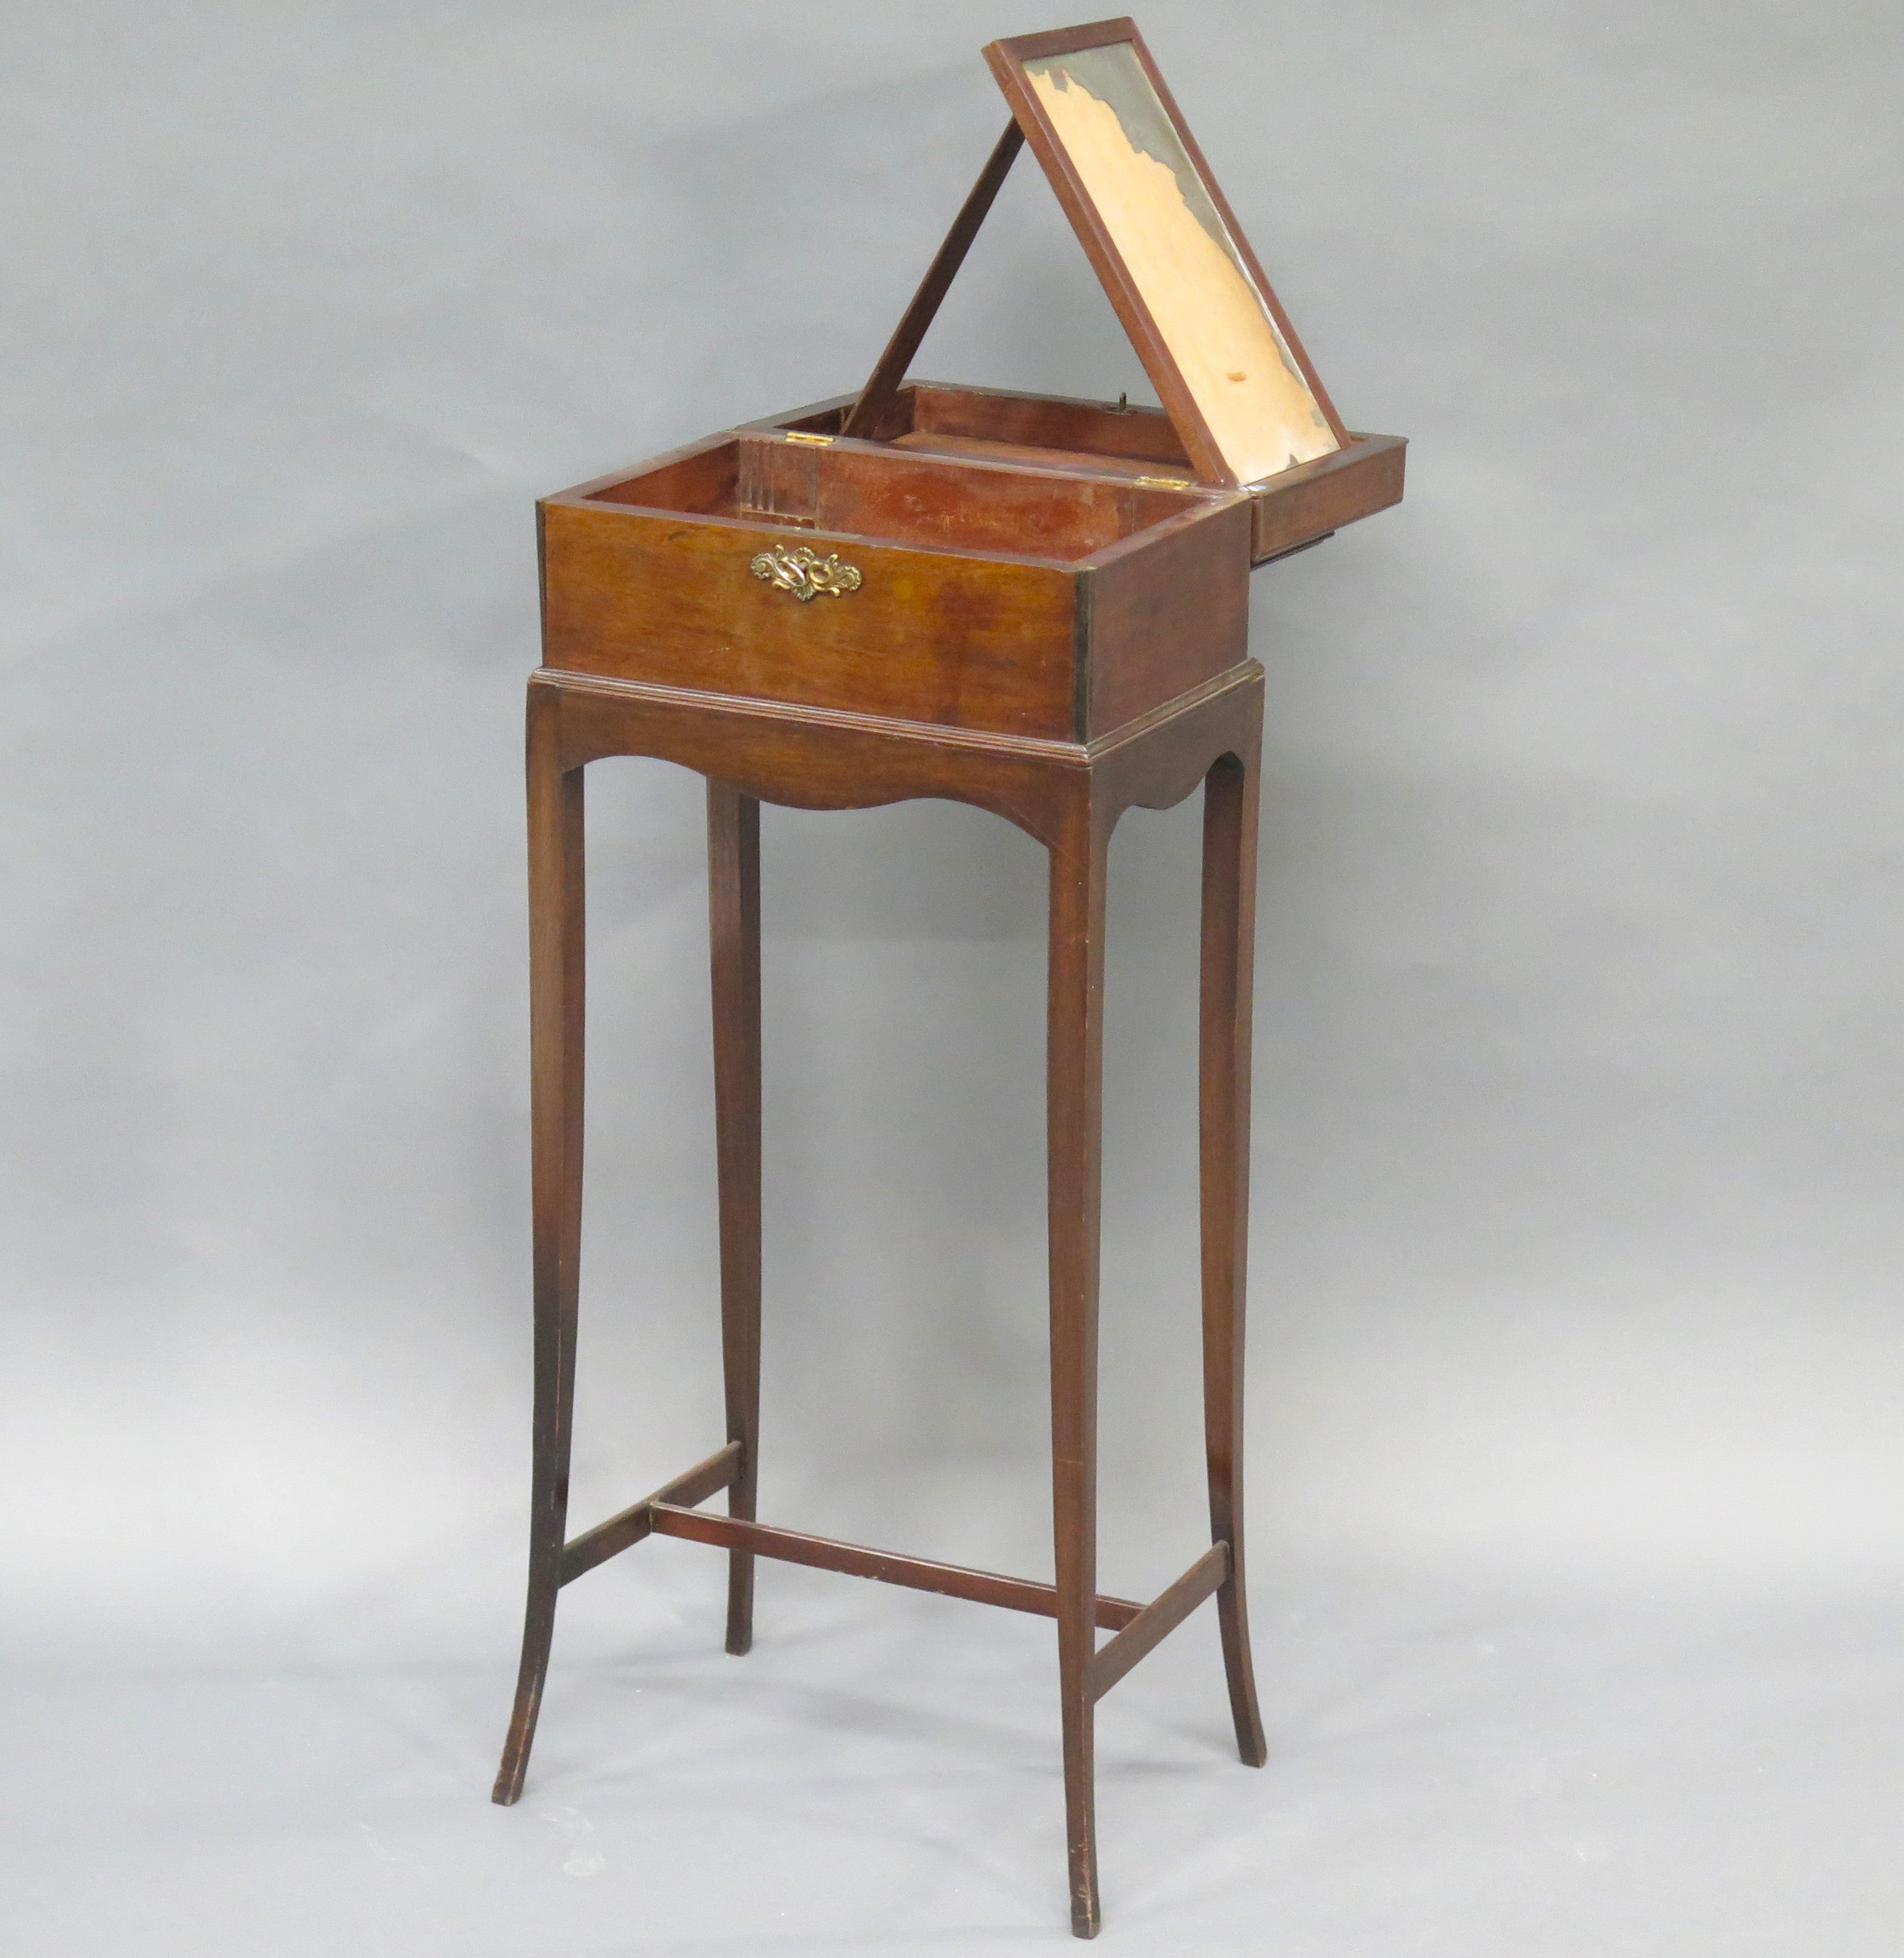 A Sheraton Mahogany Sewing Box on Stand